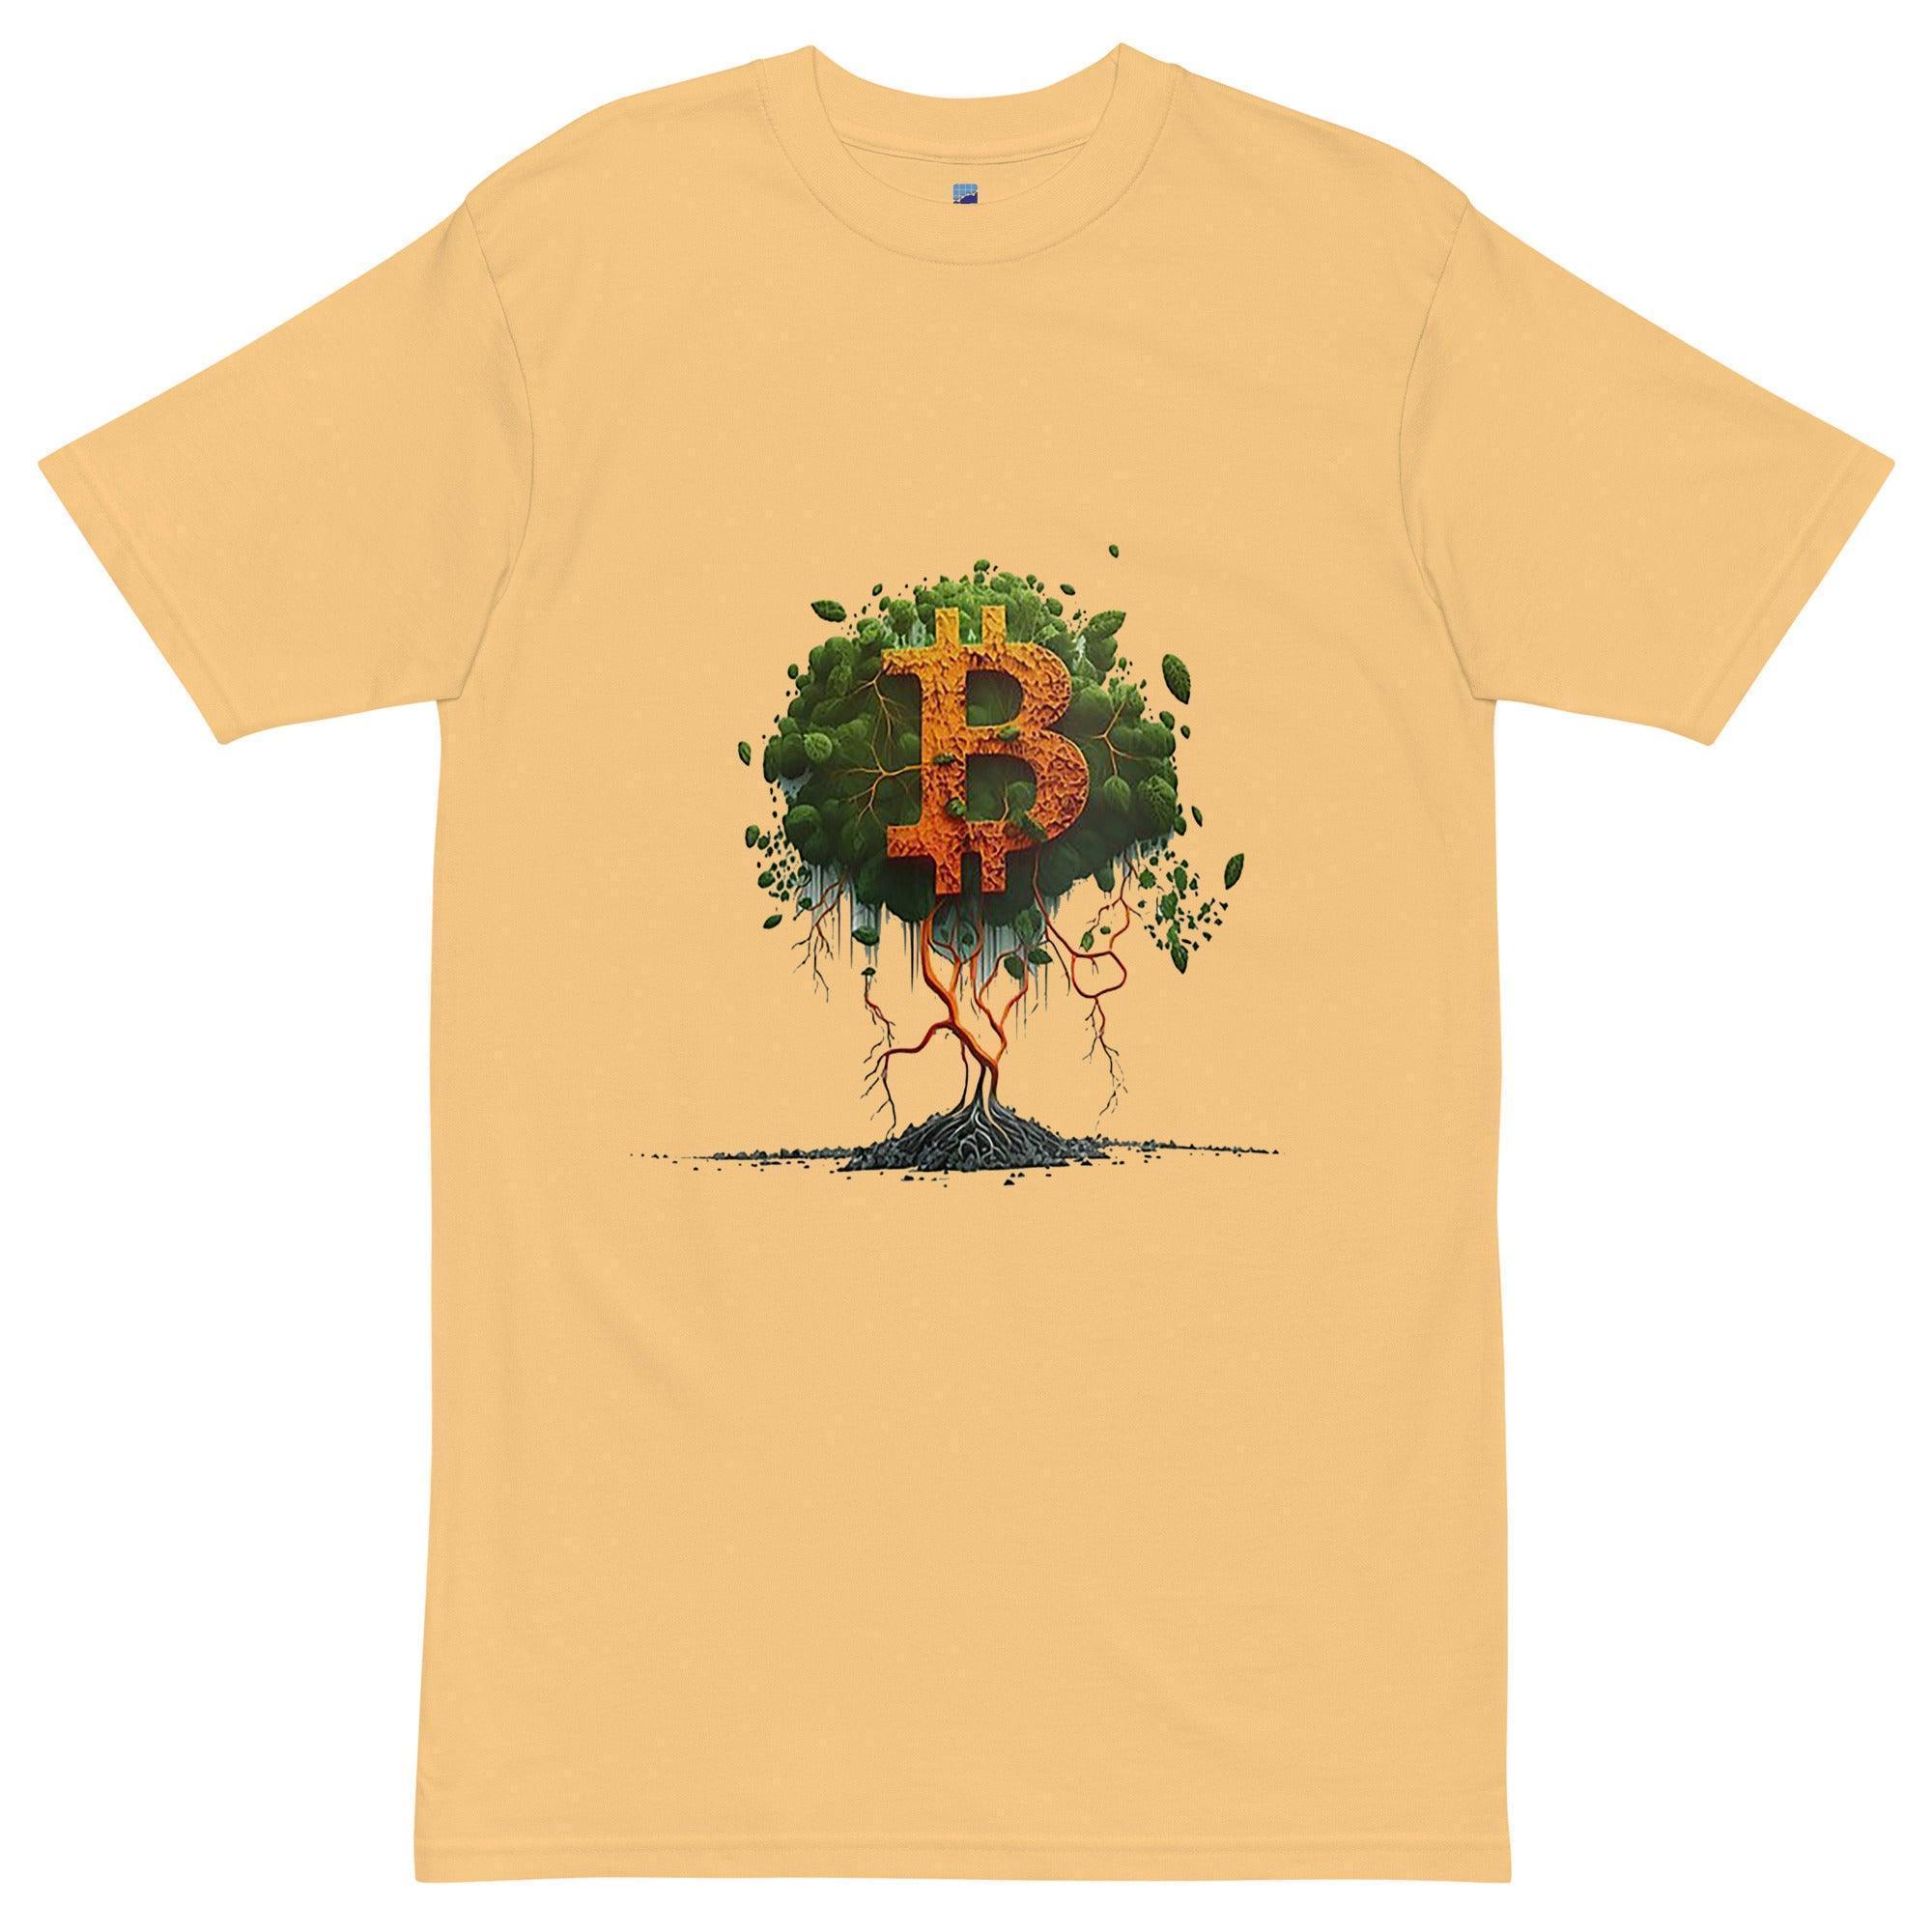 Bitcoin Mangrove Tree T-Shirt - InvestmenTees